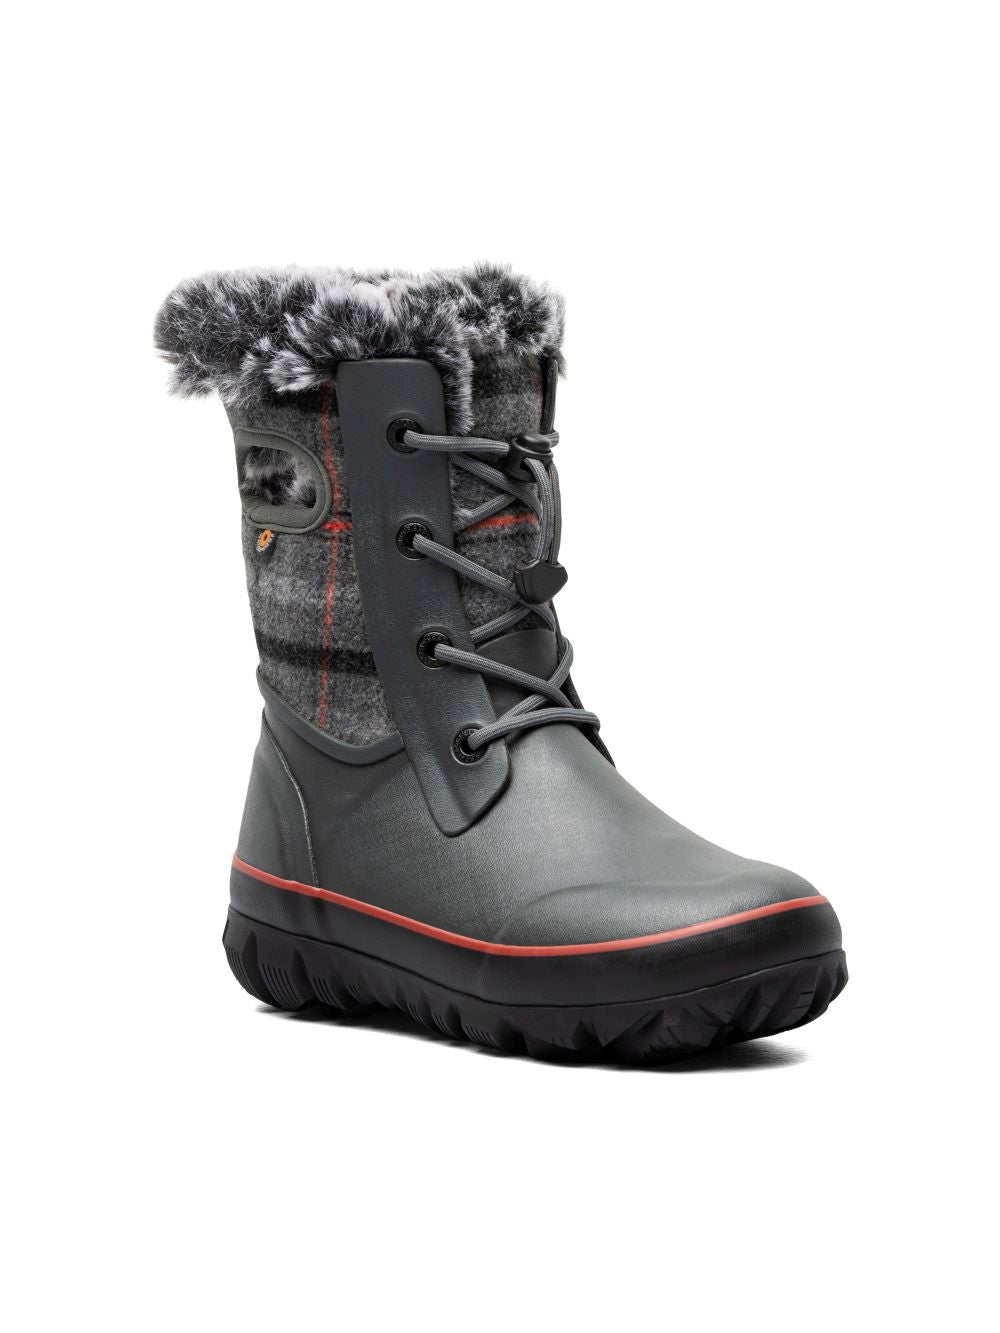 'BOGS' Kids' Arcata II Cozy Plaid Insulated WP Winter Boots - Dark Grey Multi